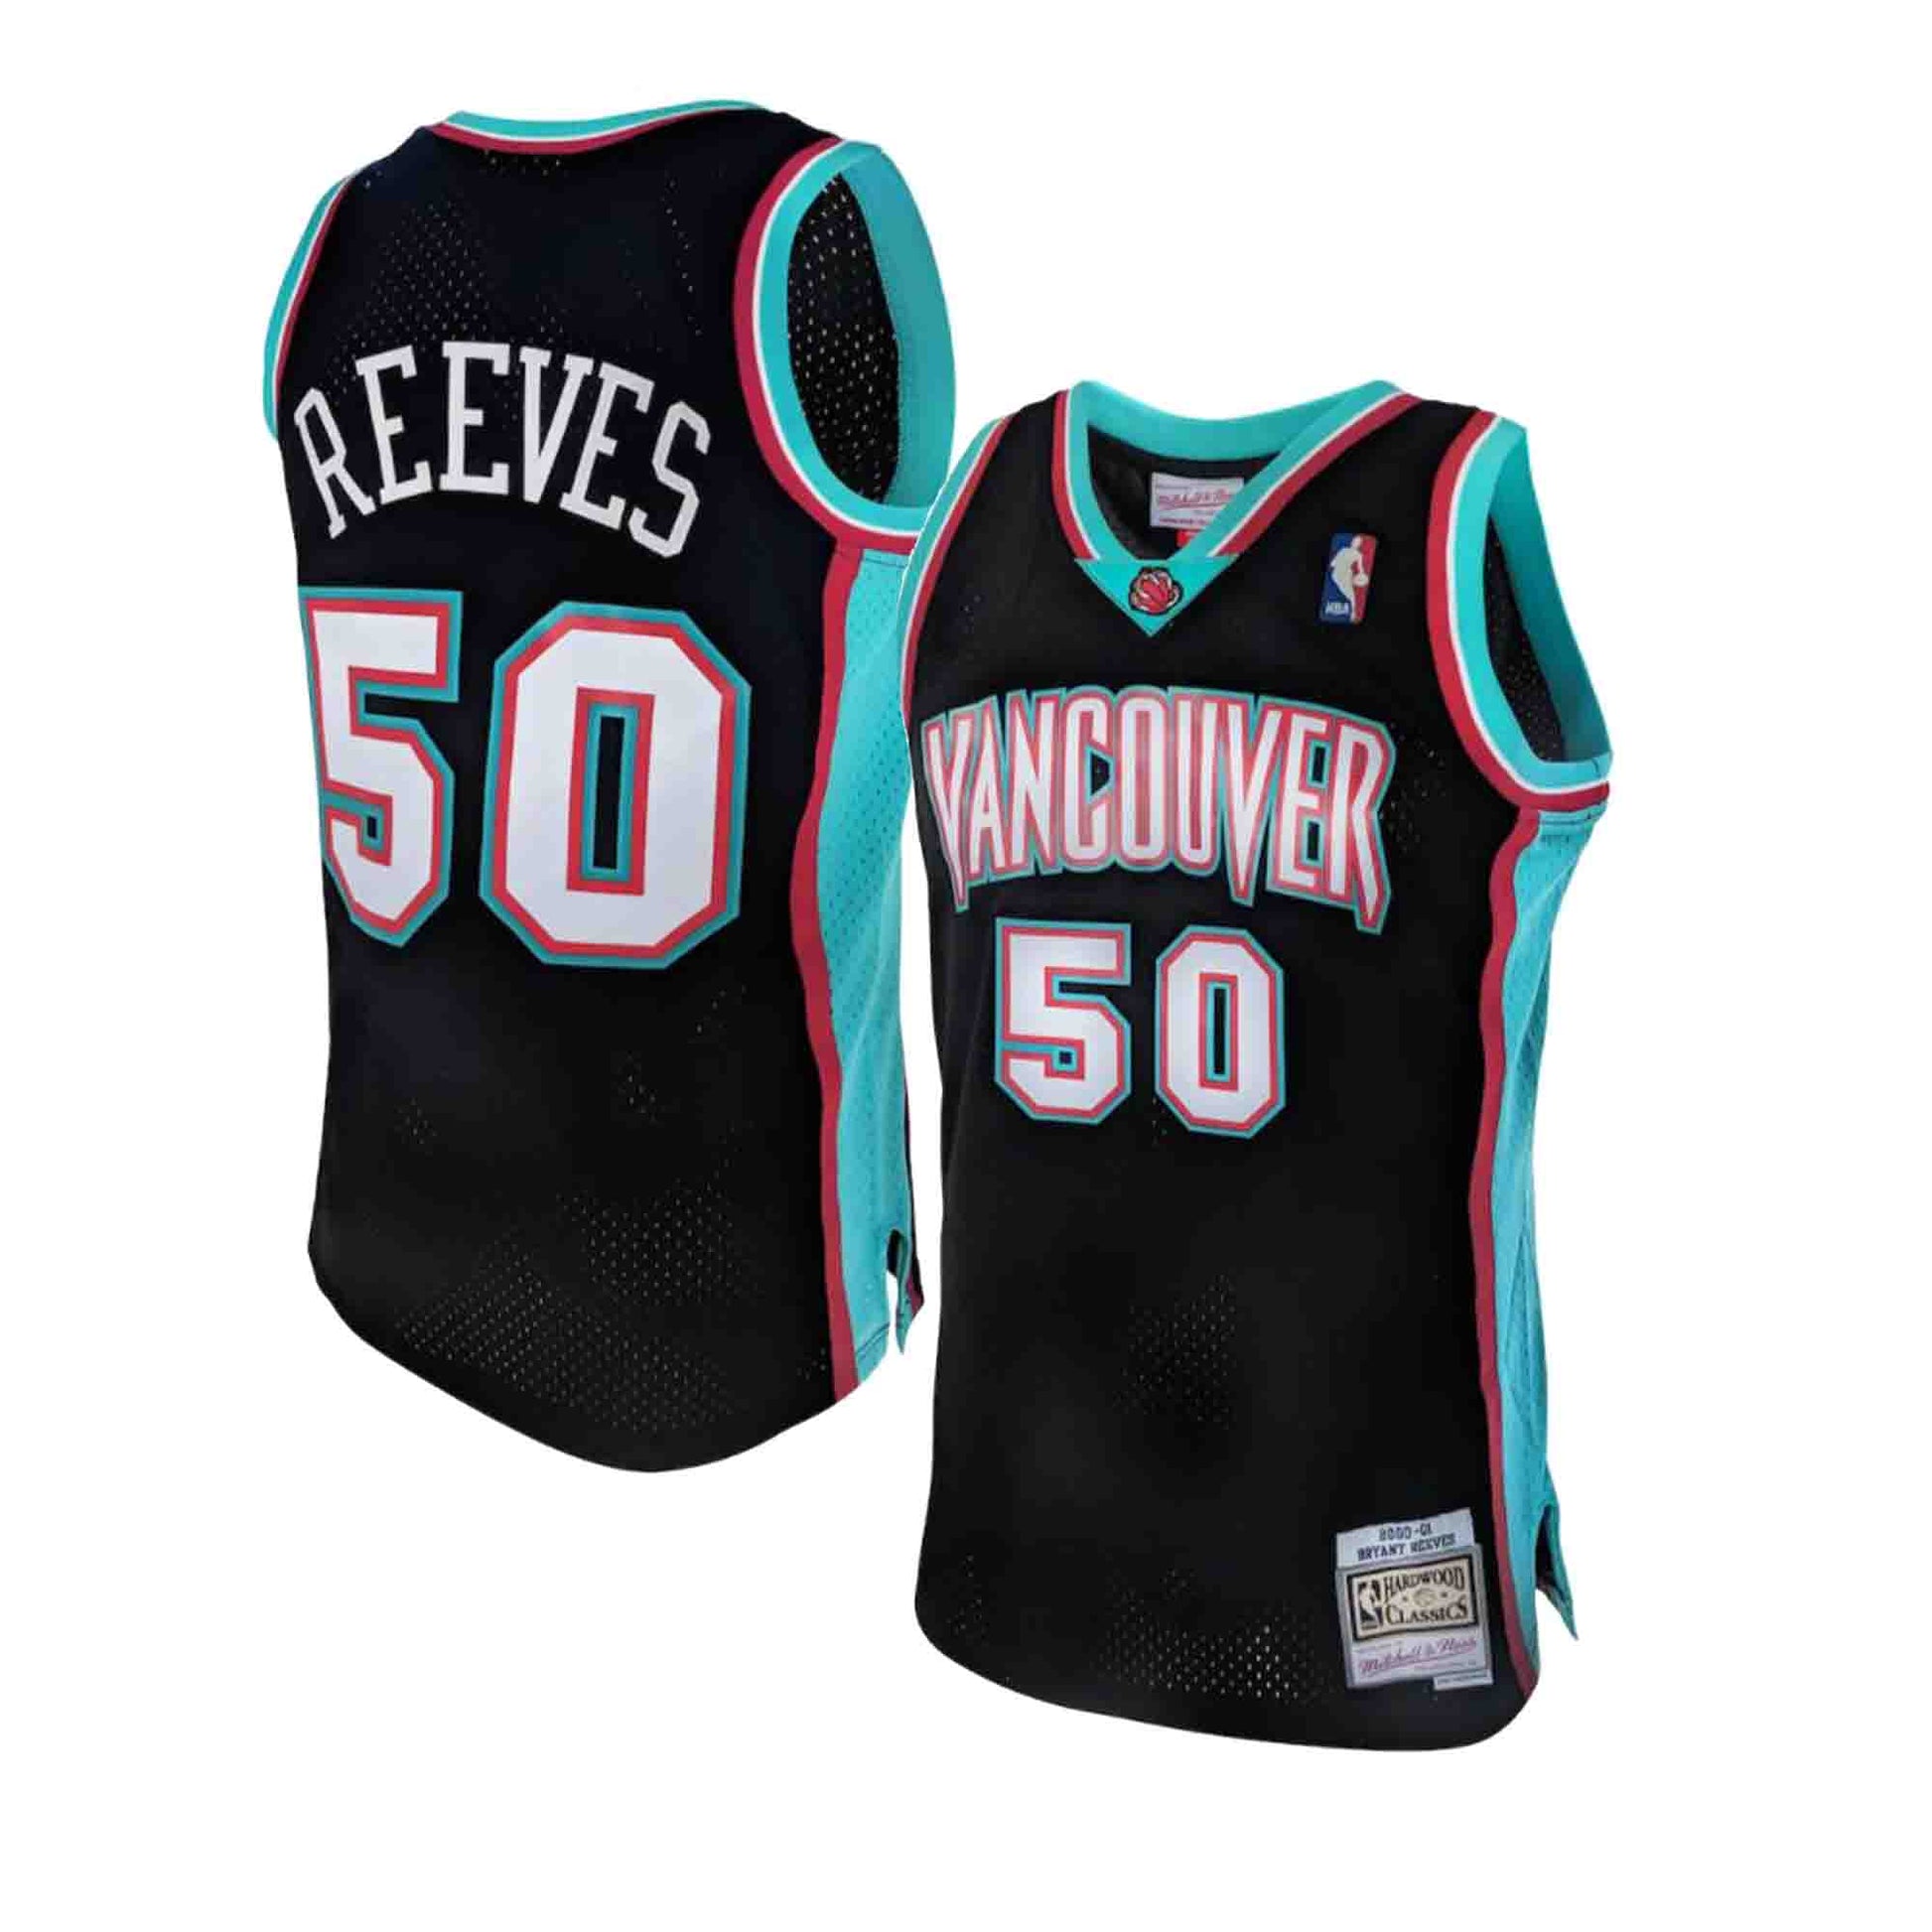 NBA Swingman Jersey Vancouver Grizzlies Bryant Reeves #50